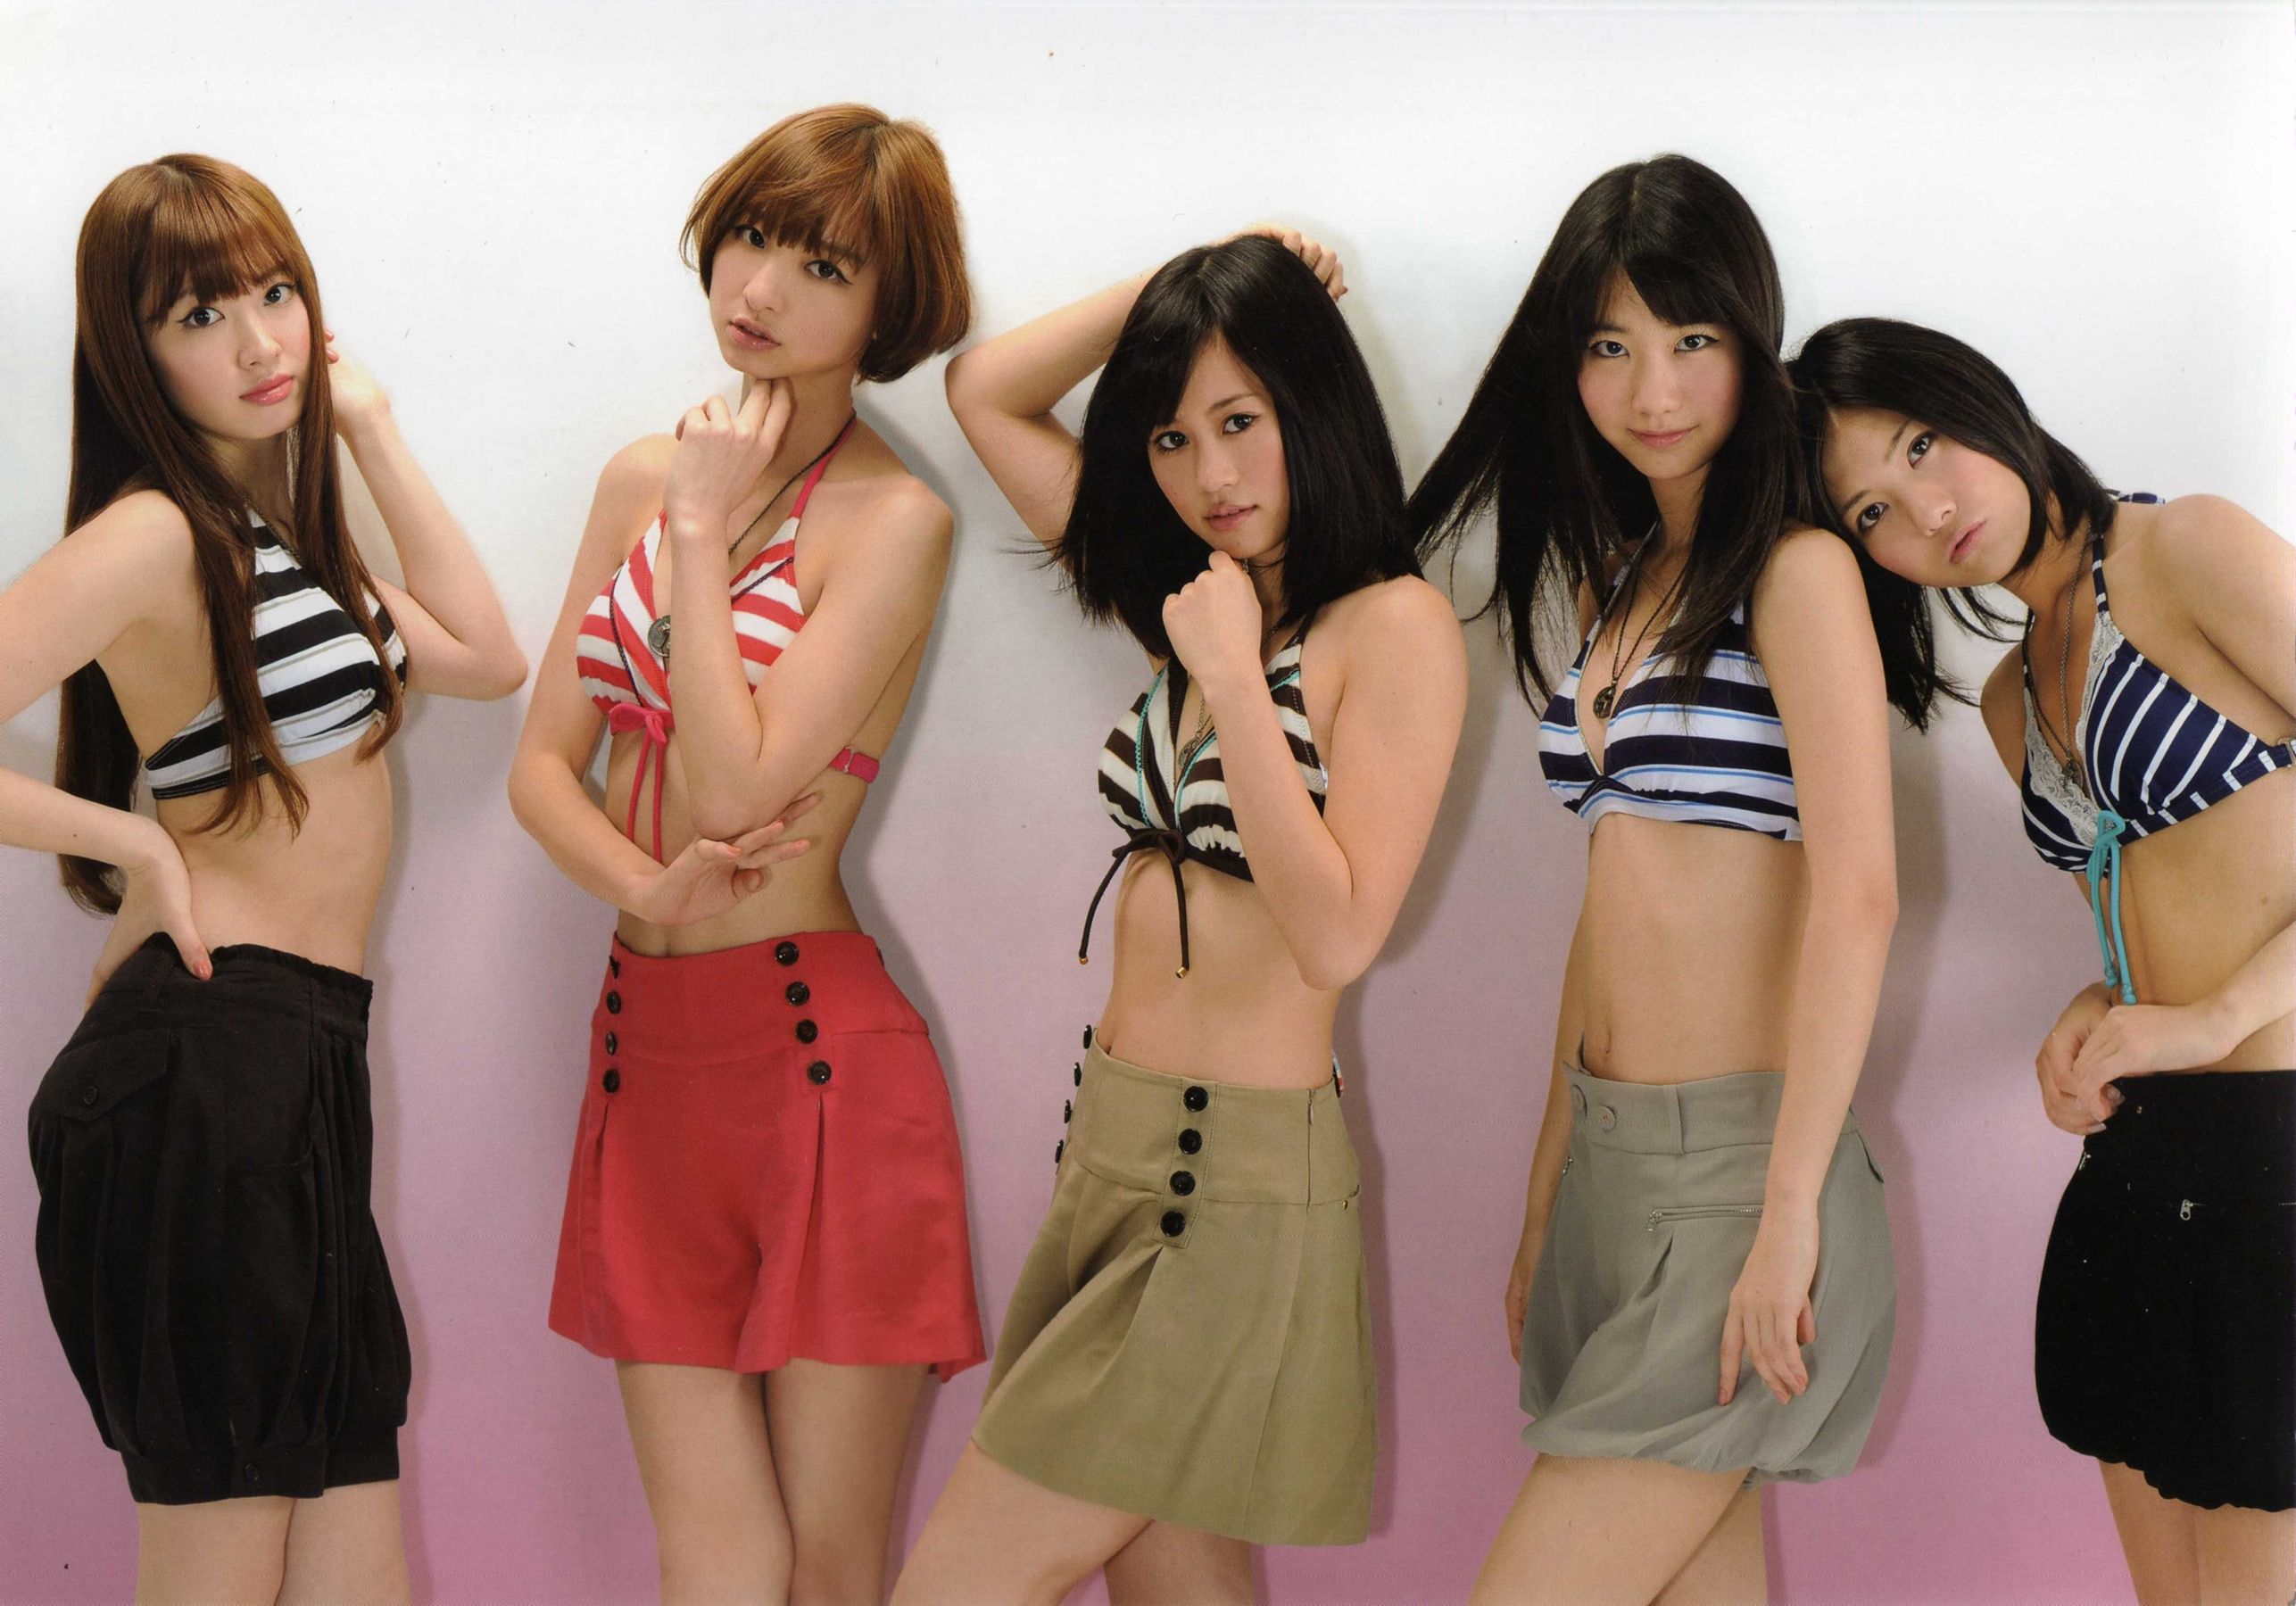 Japan AKB48 girl group "2013 Fashion Book Underwear Show" .